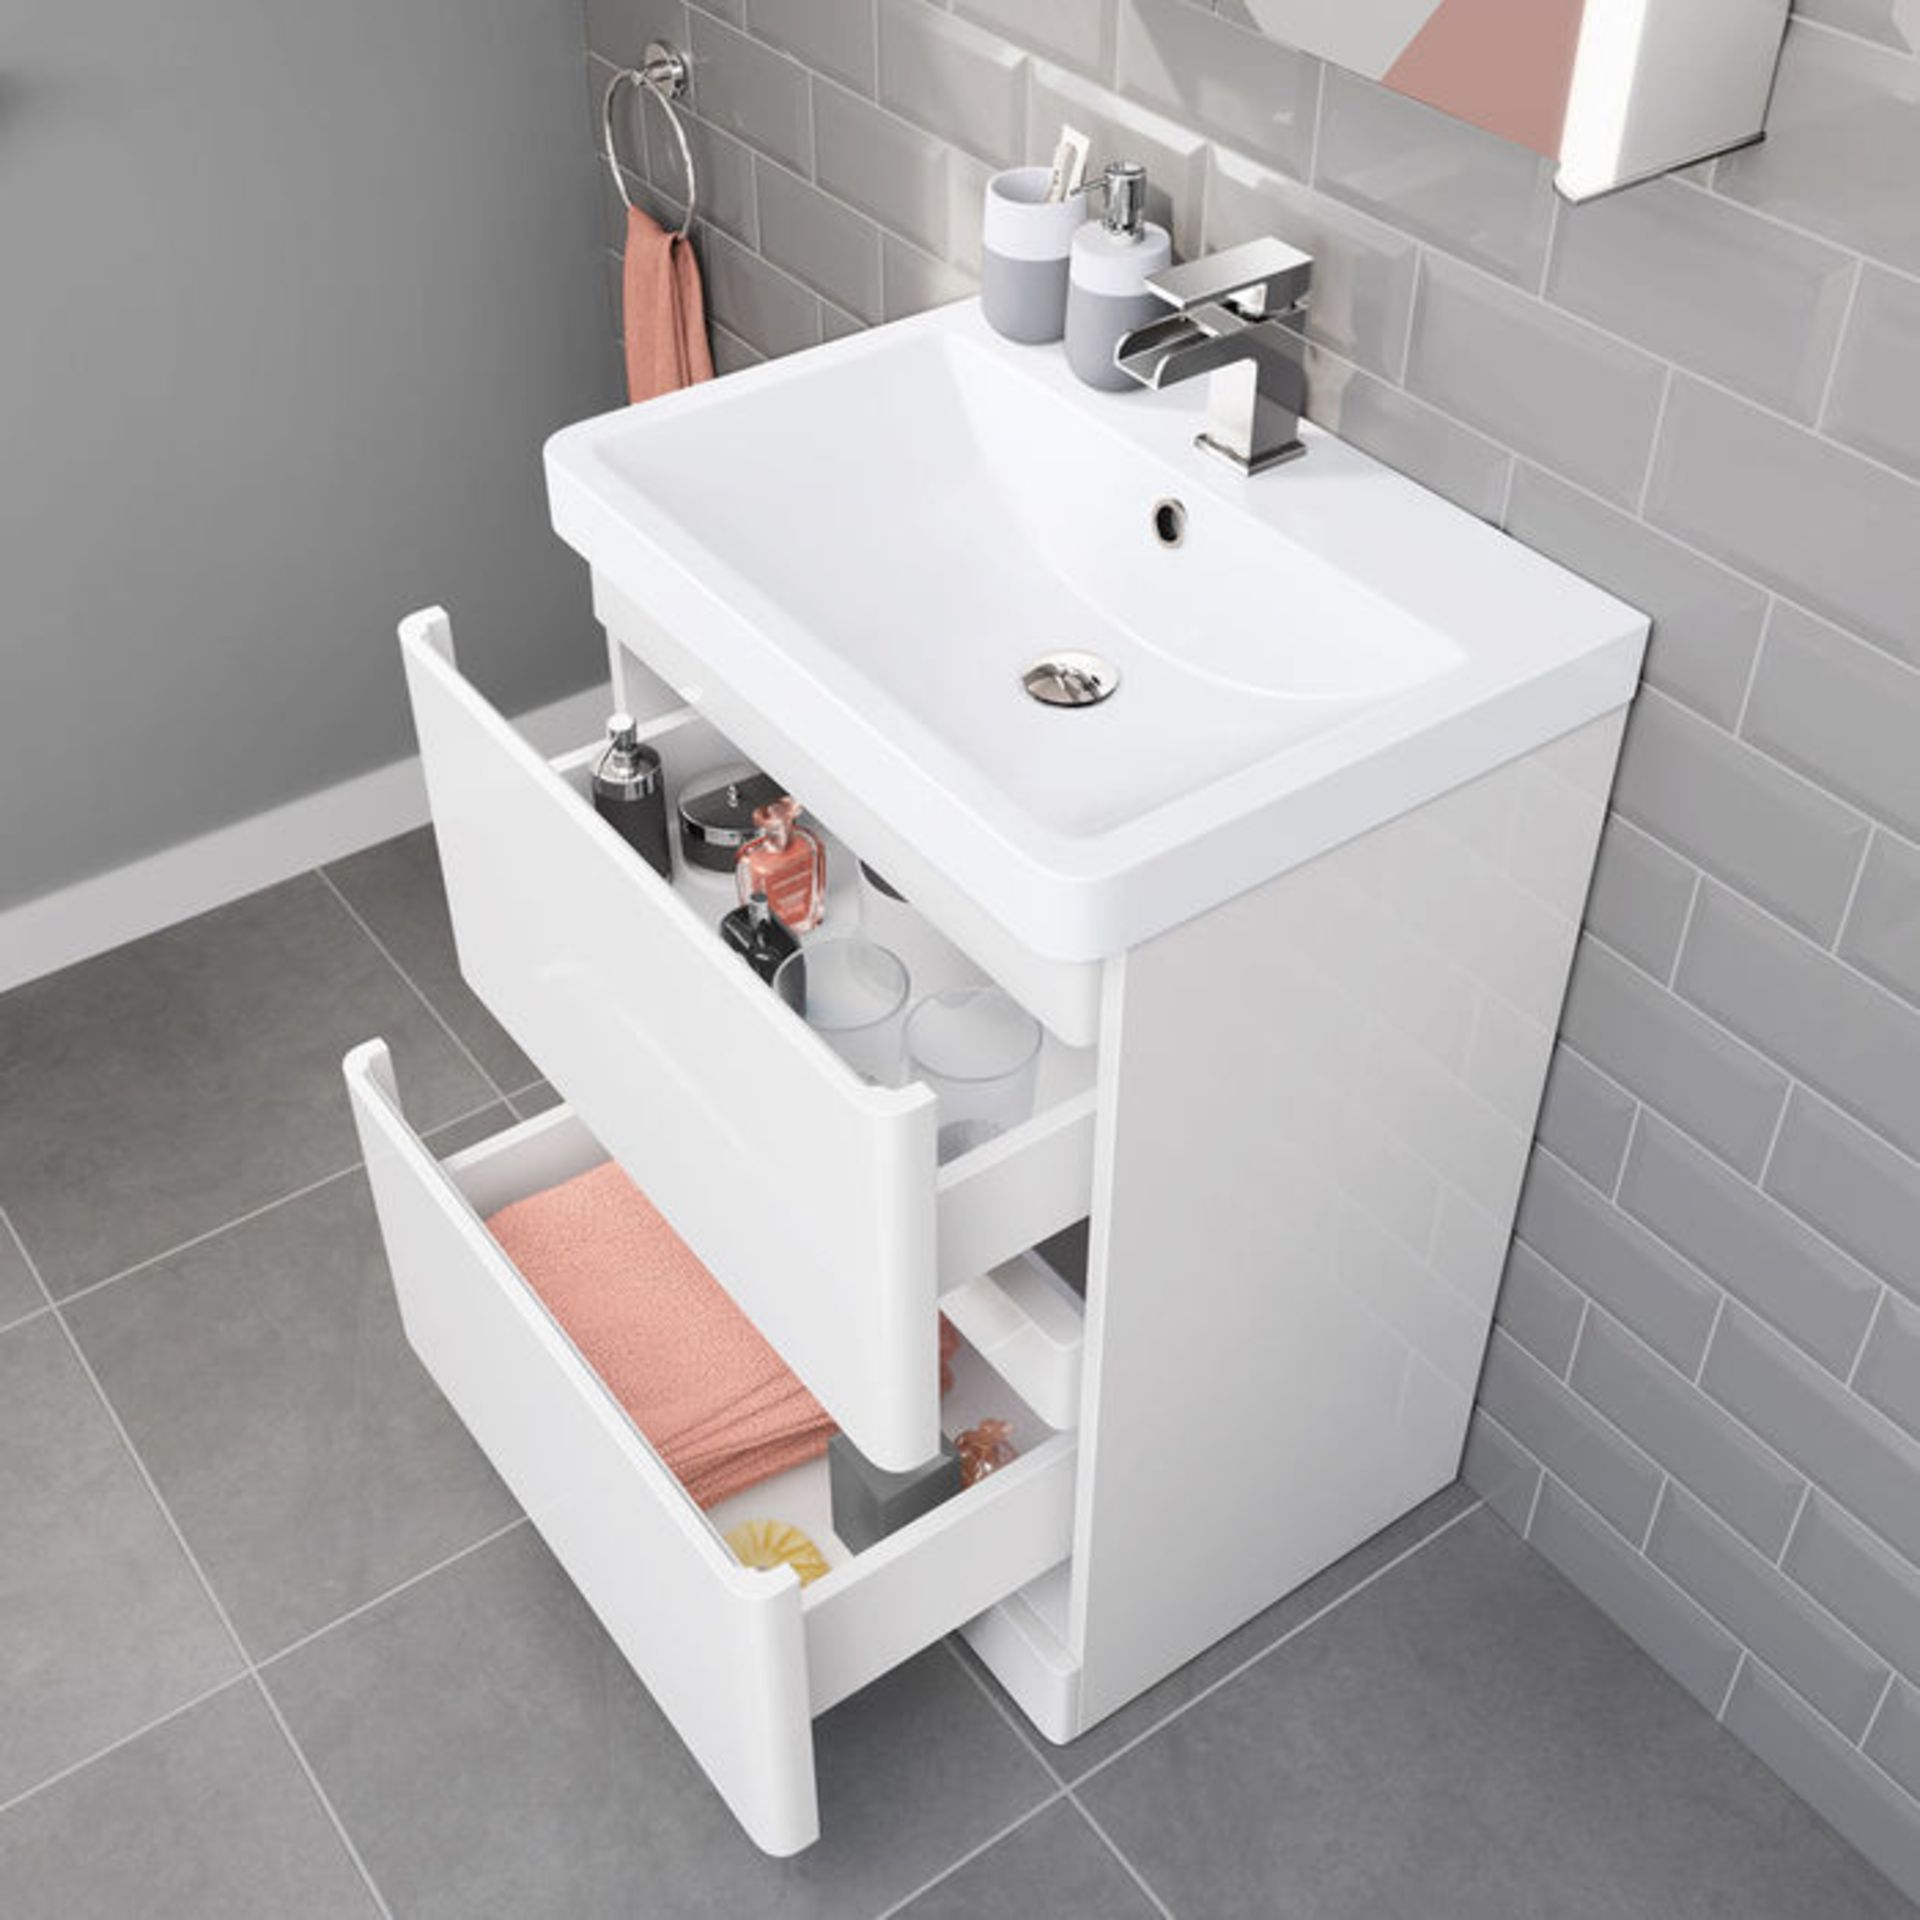 NEW & BOXED 600mm Denver Gloss White Built In Sink Drawer Unit - Floor Standing. RRP £849.99. ... - Image 2 of 4